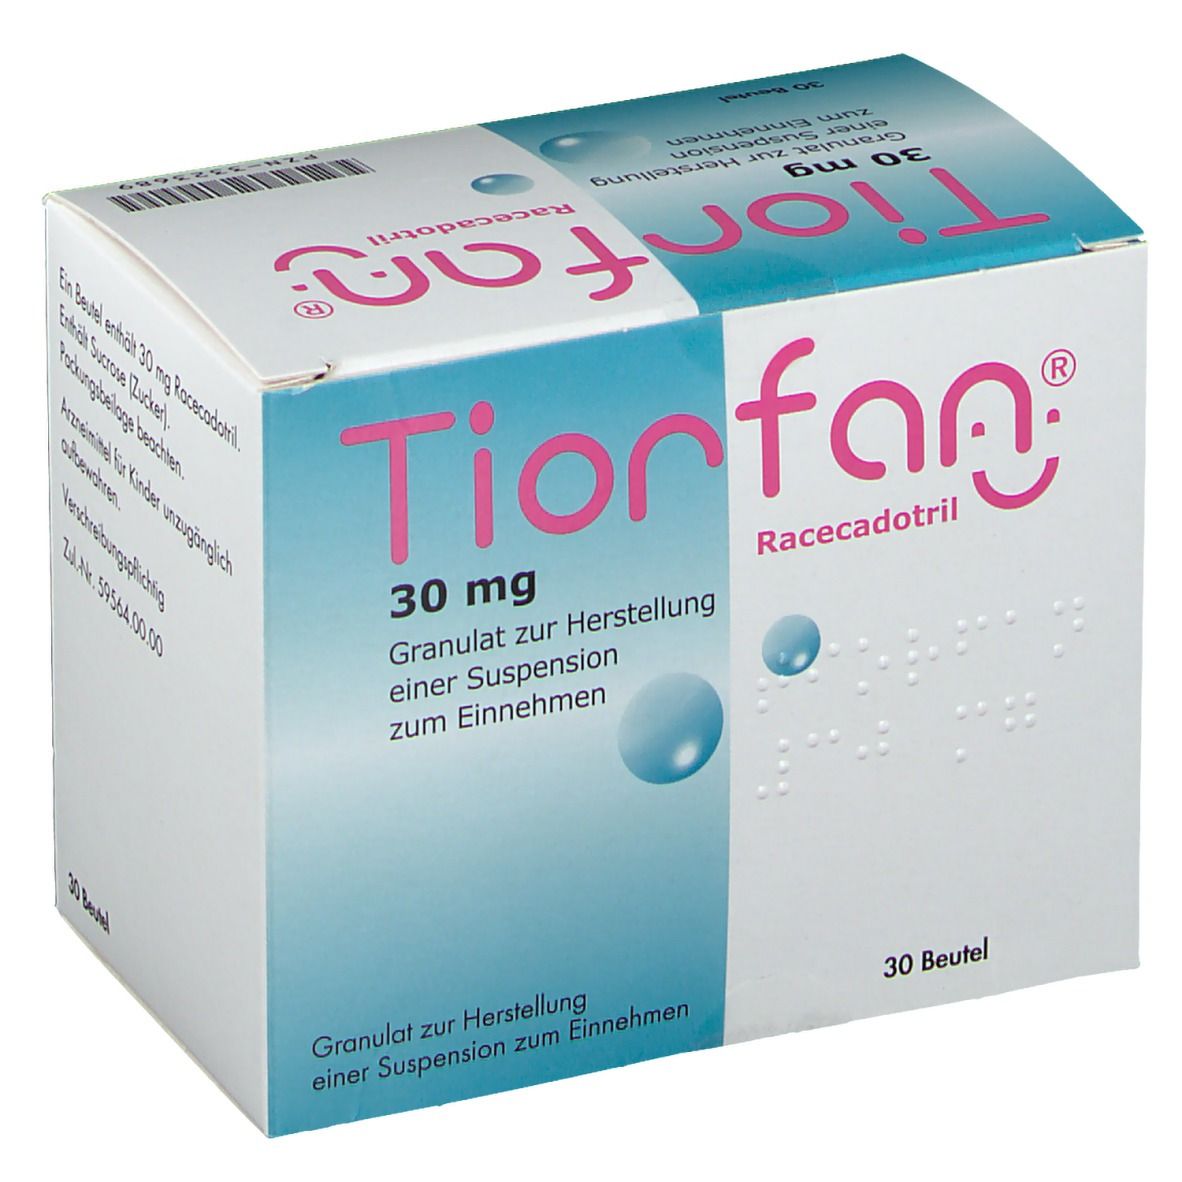 Tiorfan® 30 mg